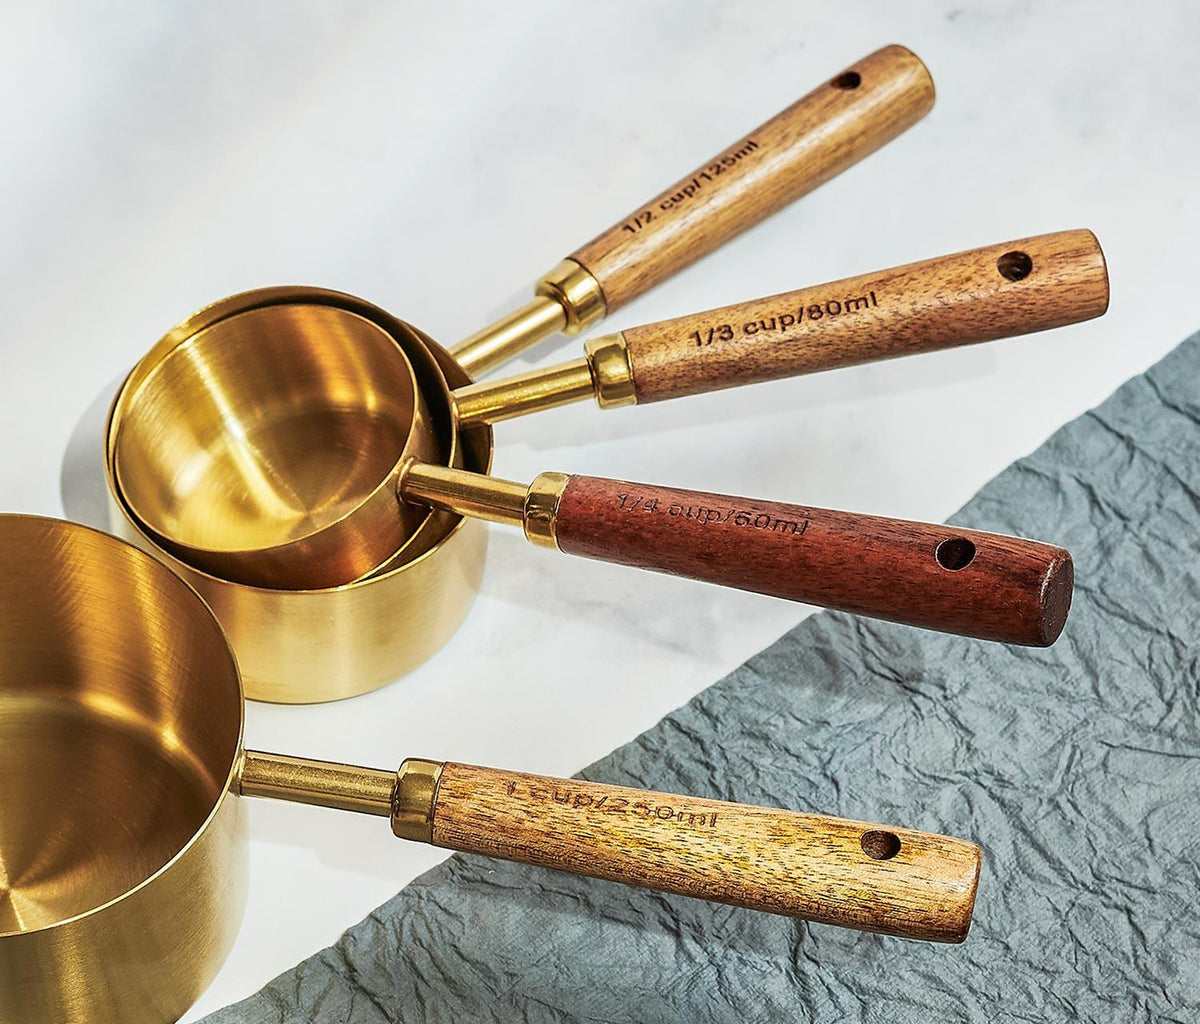 Acacia Wood and Gold Measuring Spoons, Set of 4 + Reviews